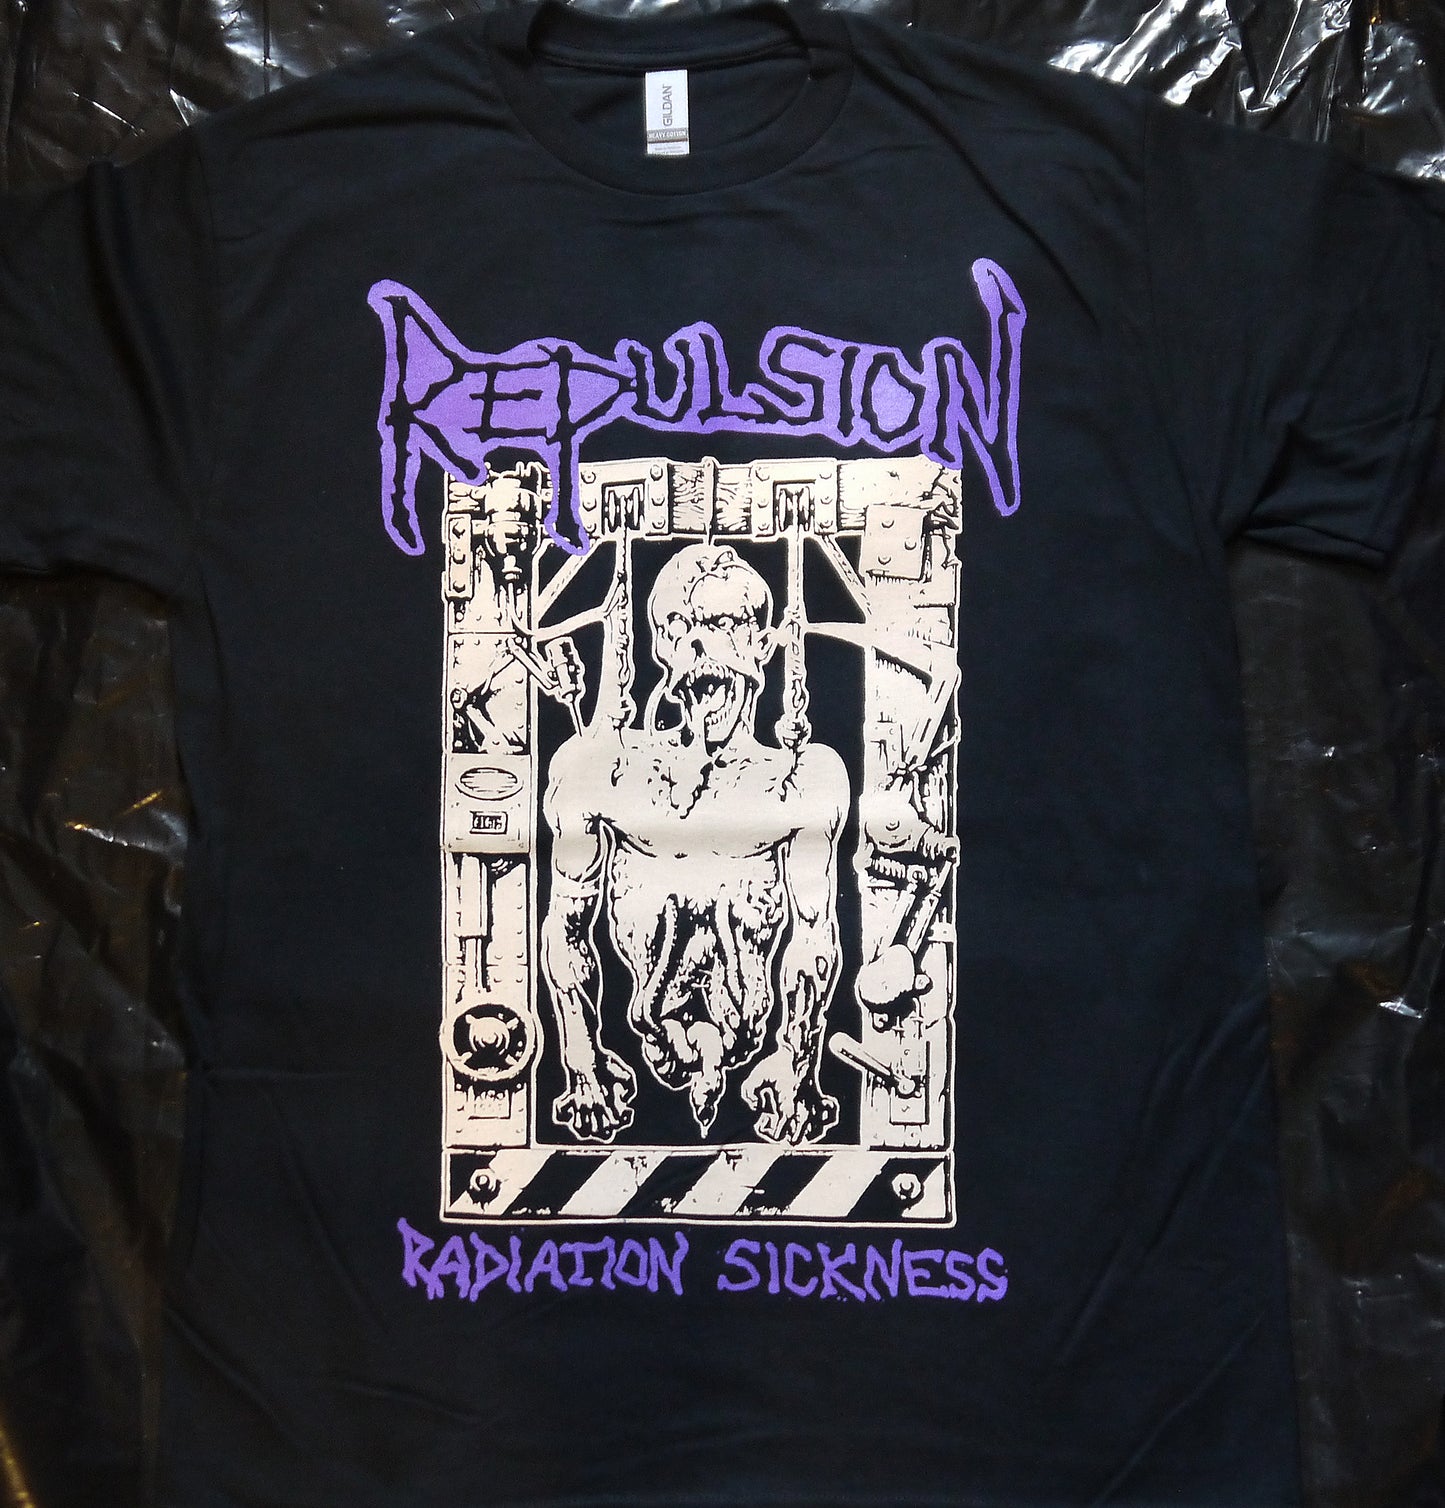 REPULSION - Radiation Sickness T-shirt